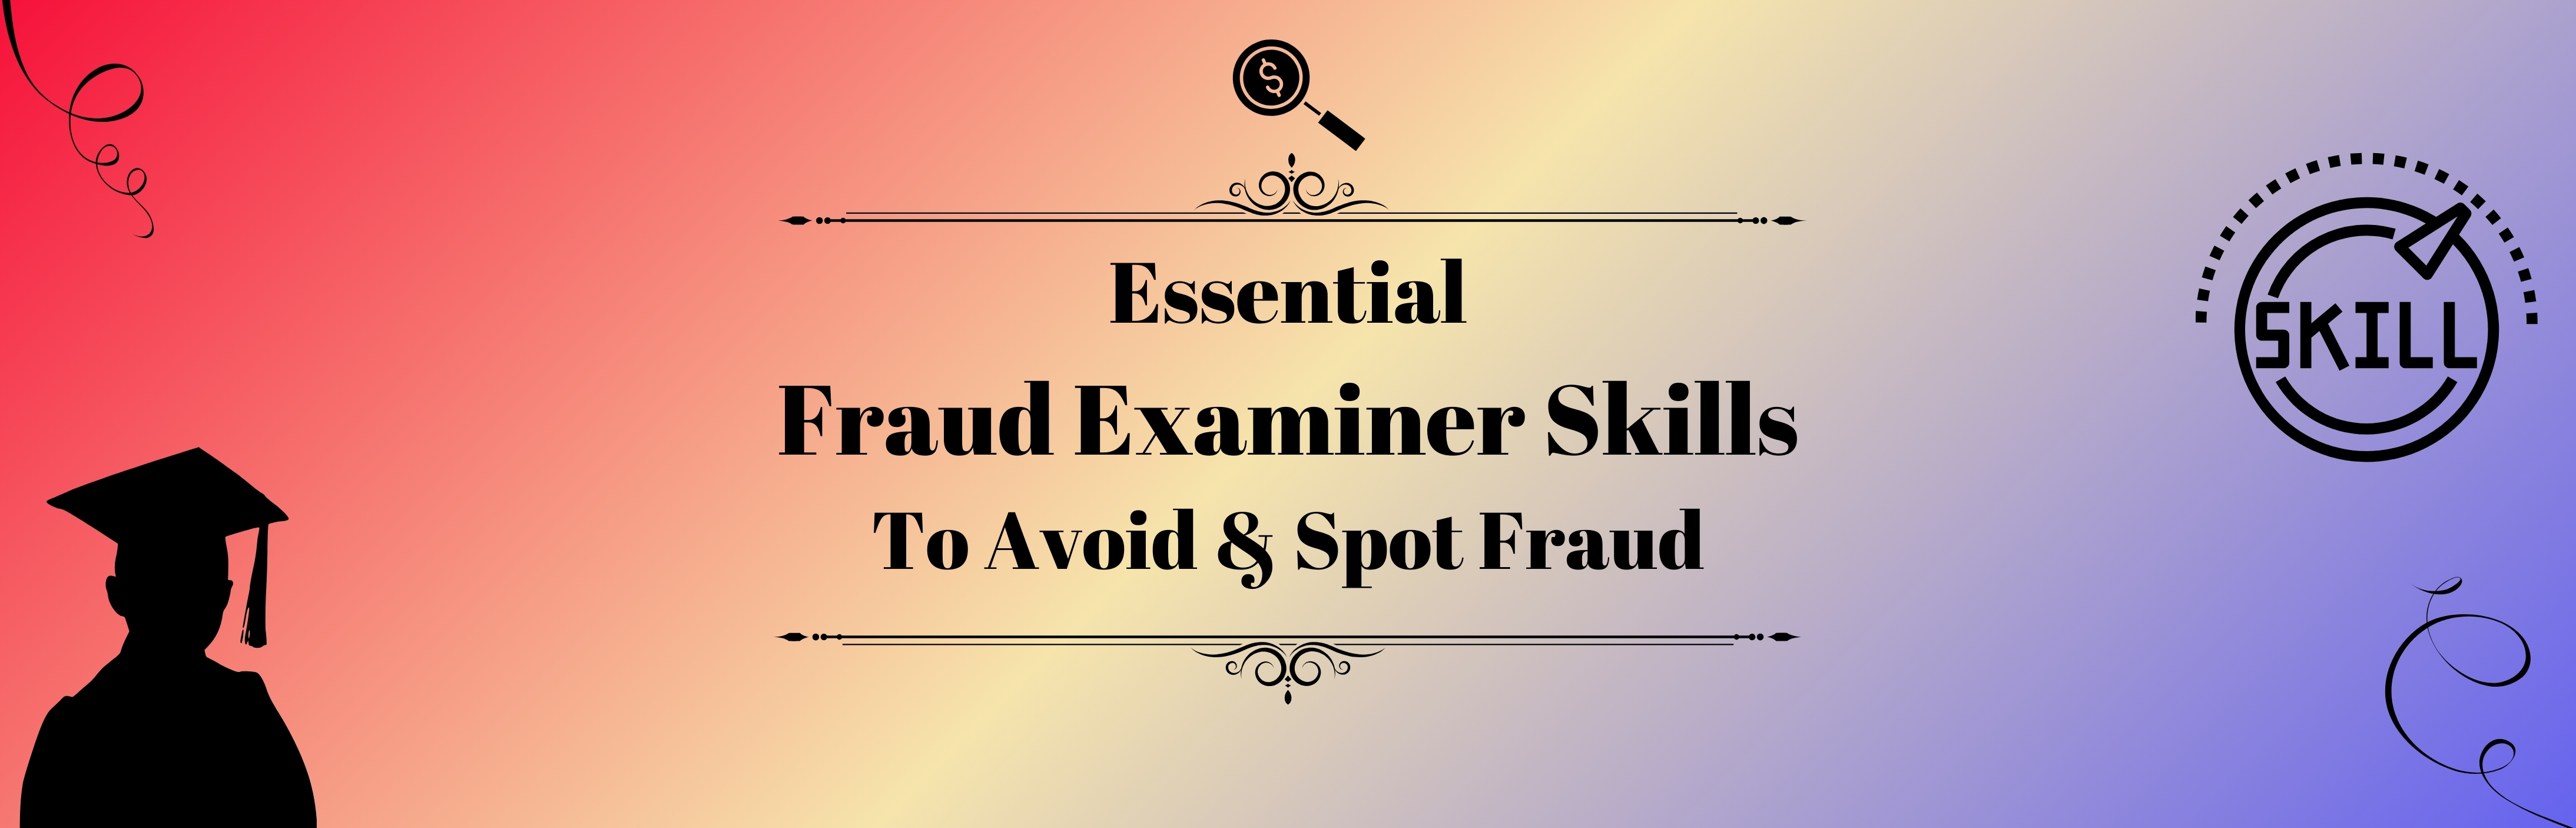 Essential Fraud Examiner Skills To Avoid & Spot Fraud